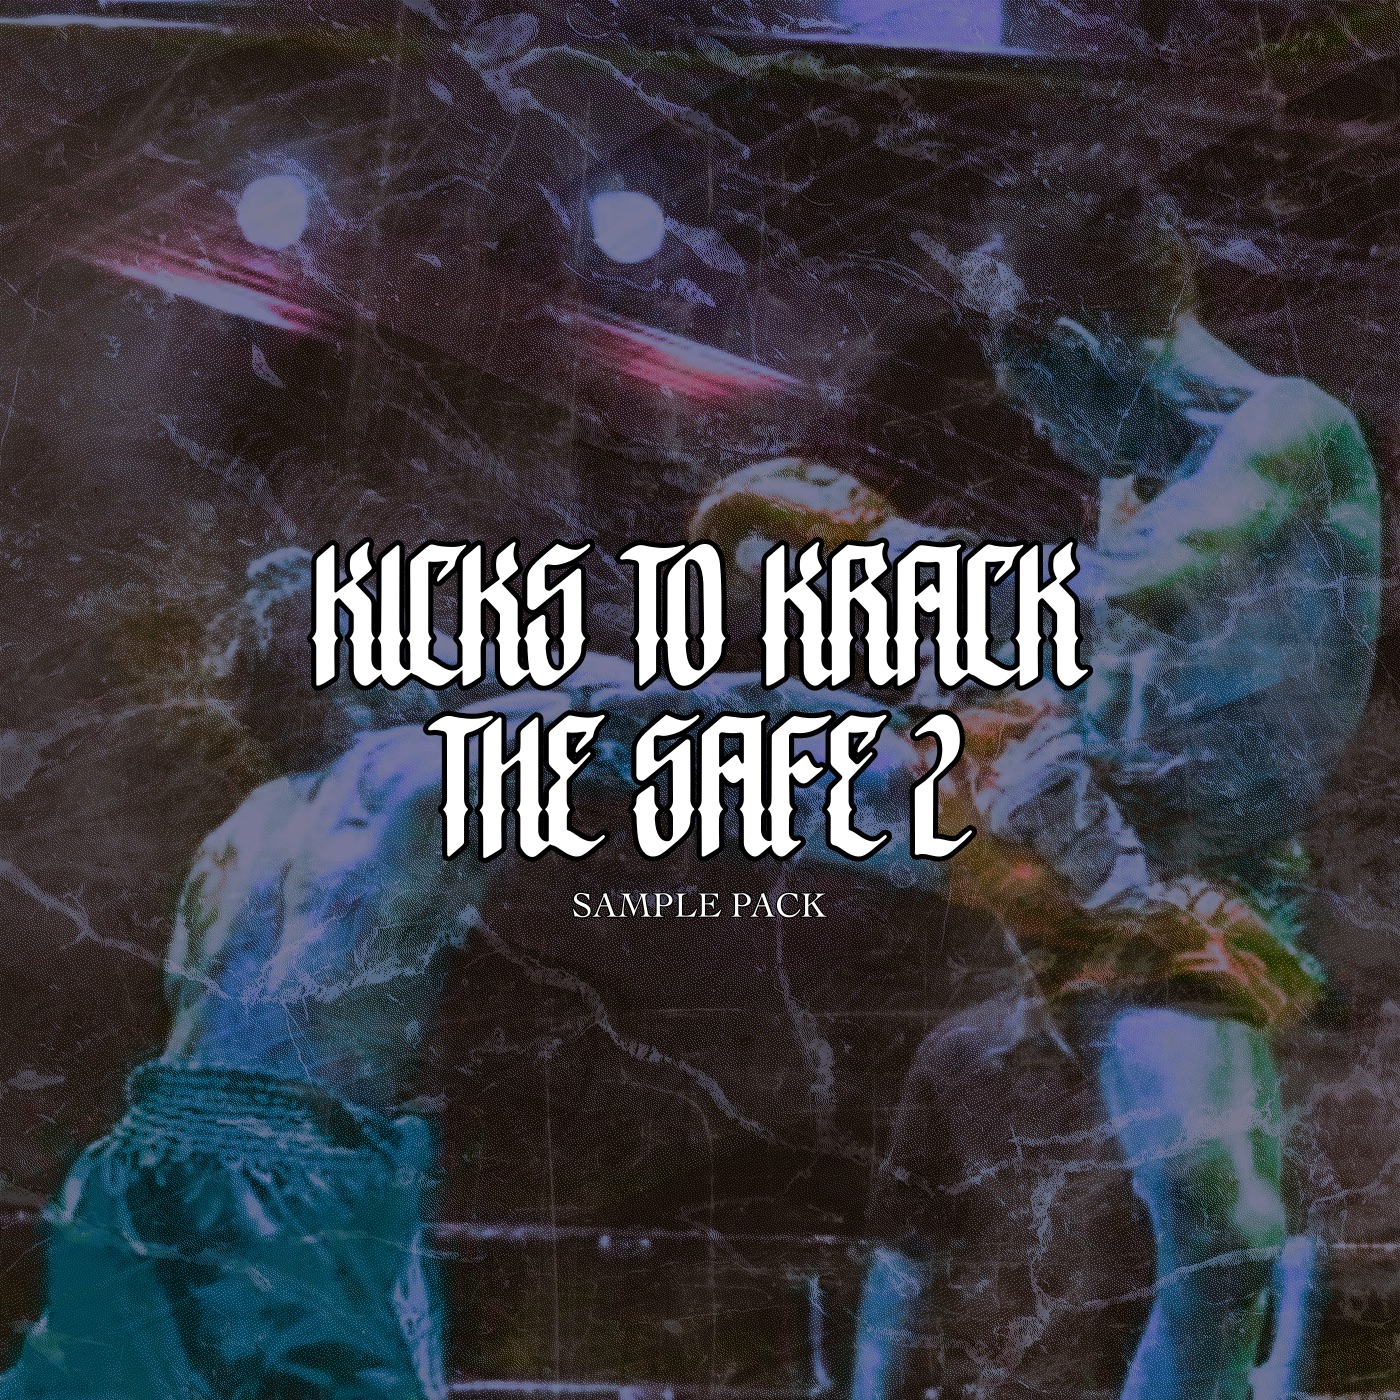 Green Fetish Records - Kicks To Krack The Safe Vol. 2